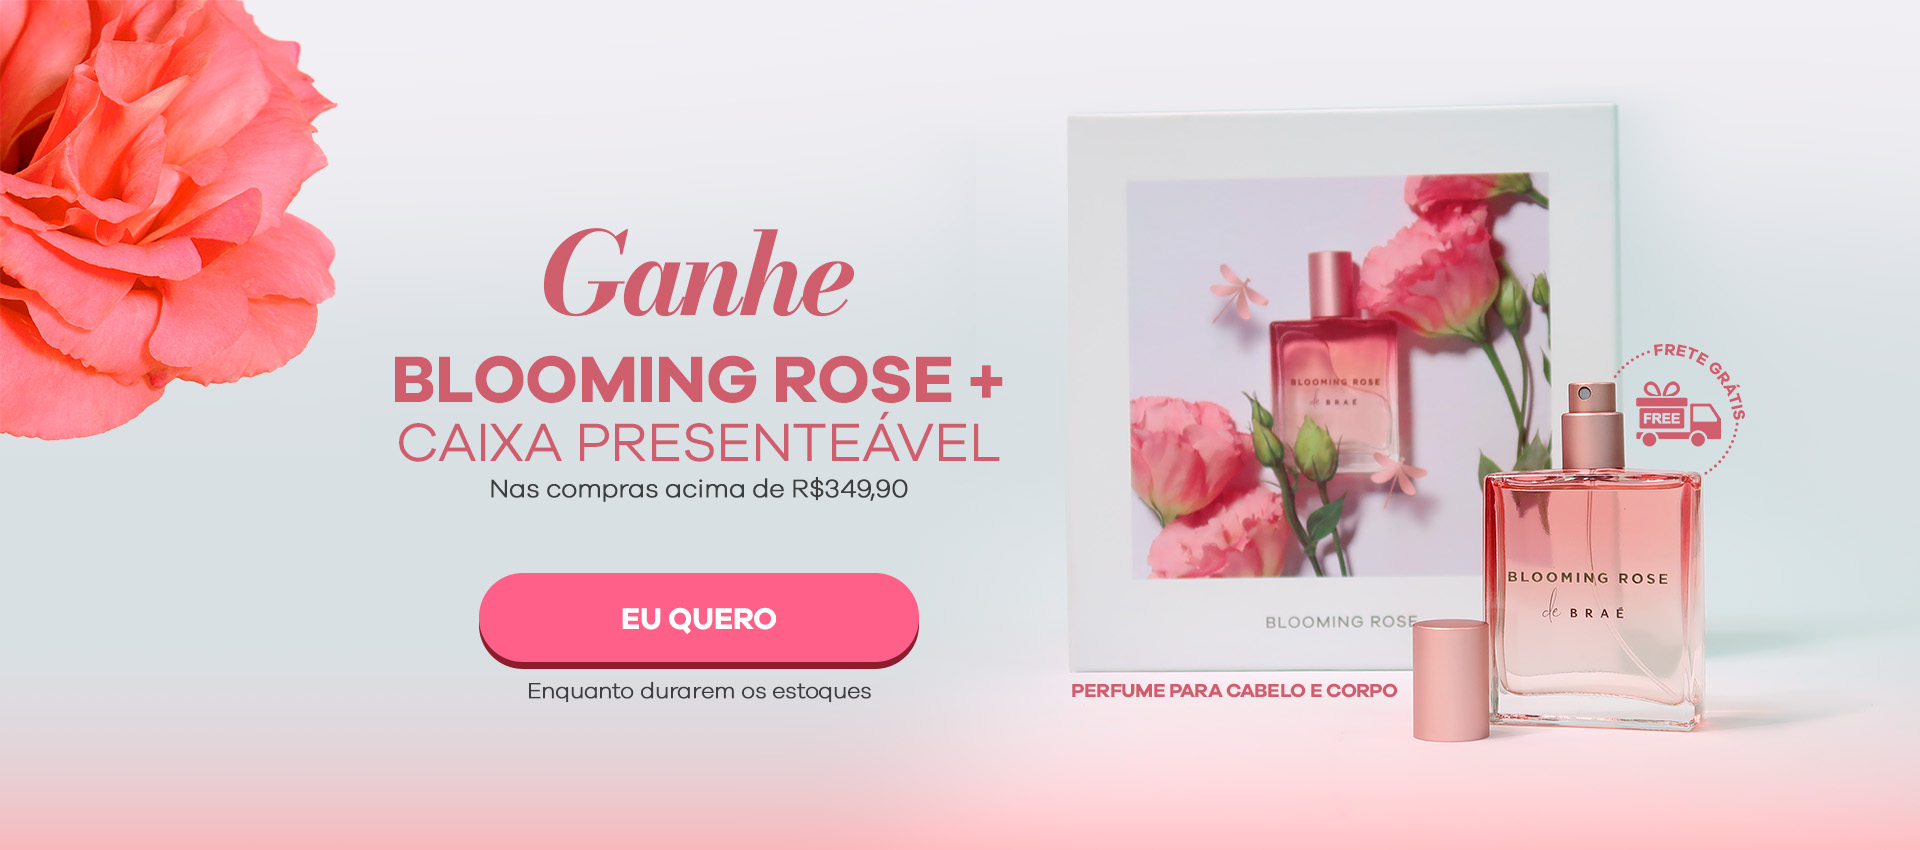 Ganhe Blooming Rose + Caixa presenteável